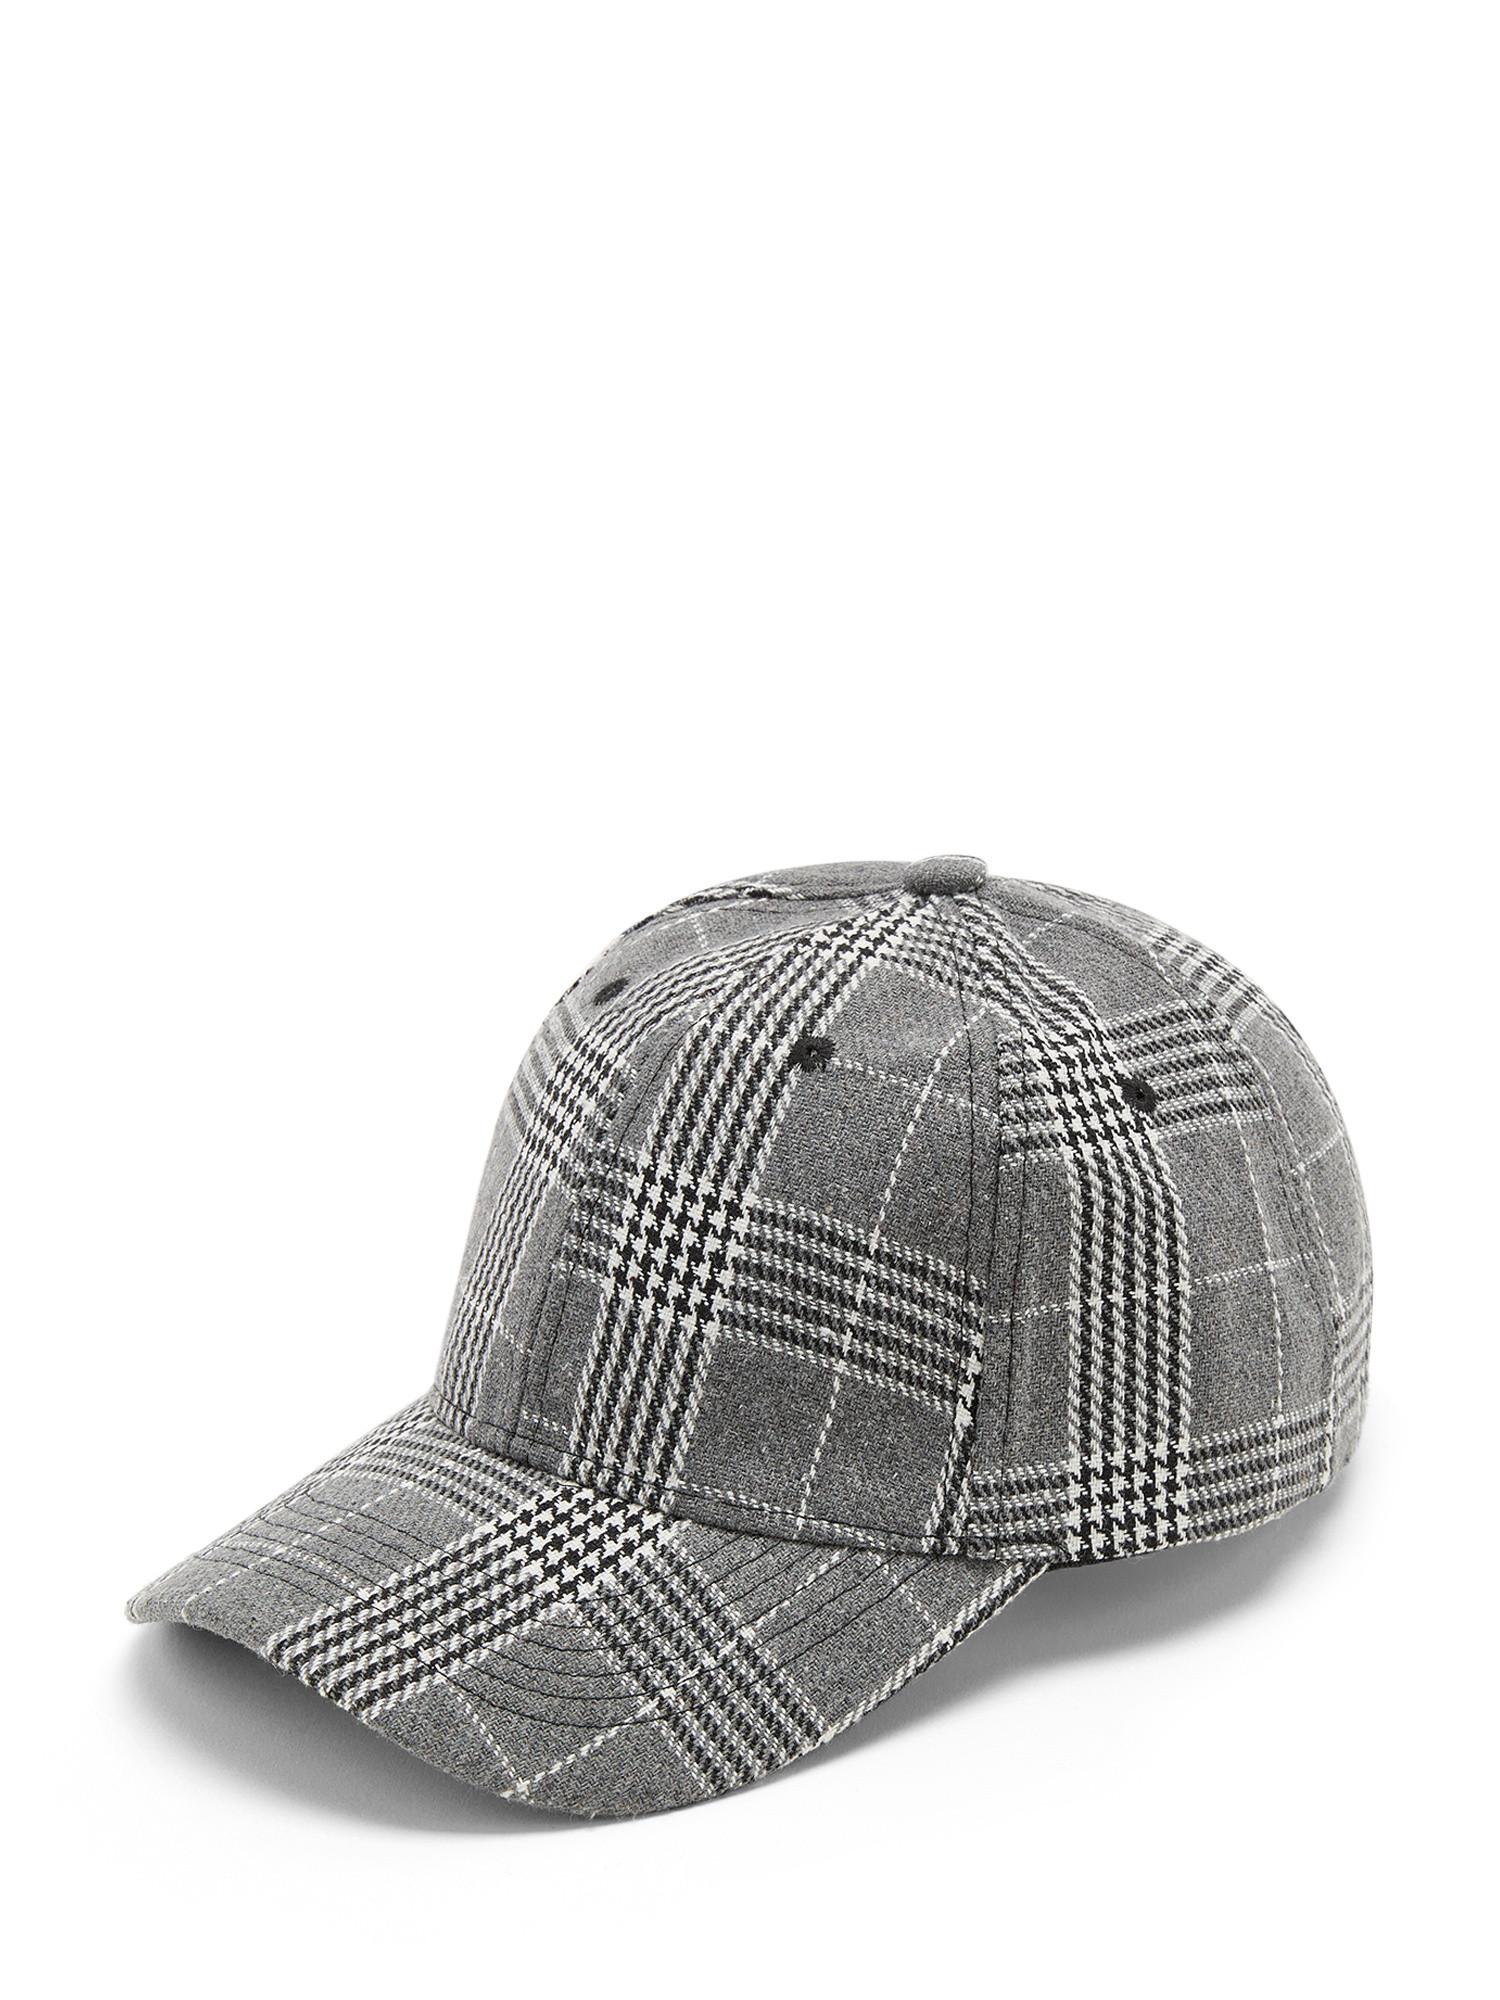 Luca D'Altieri - Cloth baseball cap, Black, large image number 0